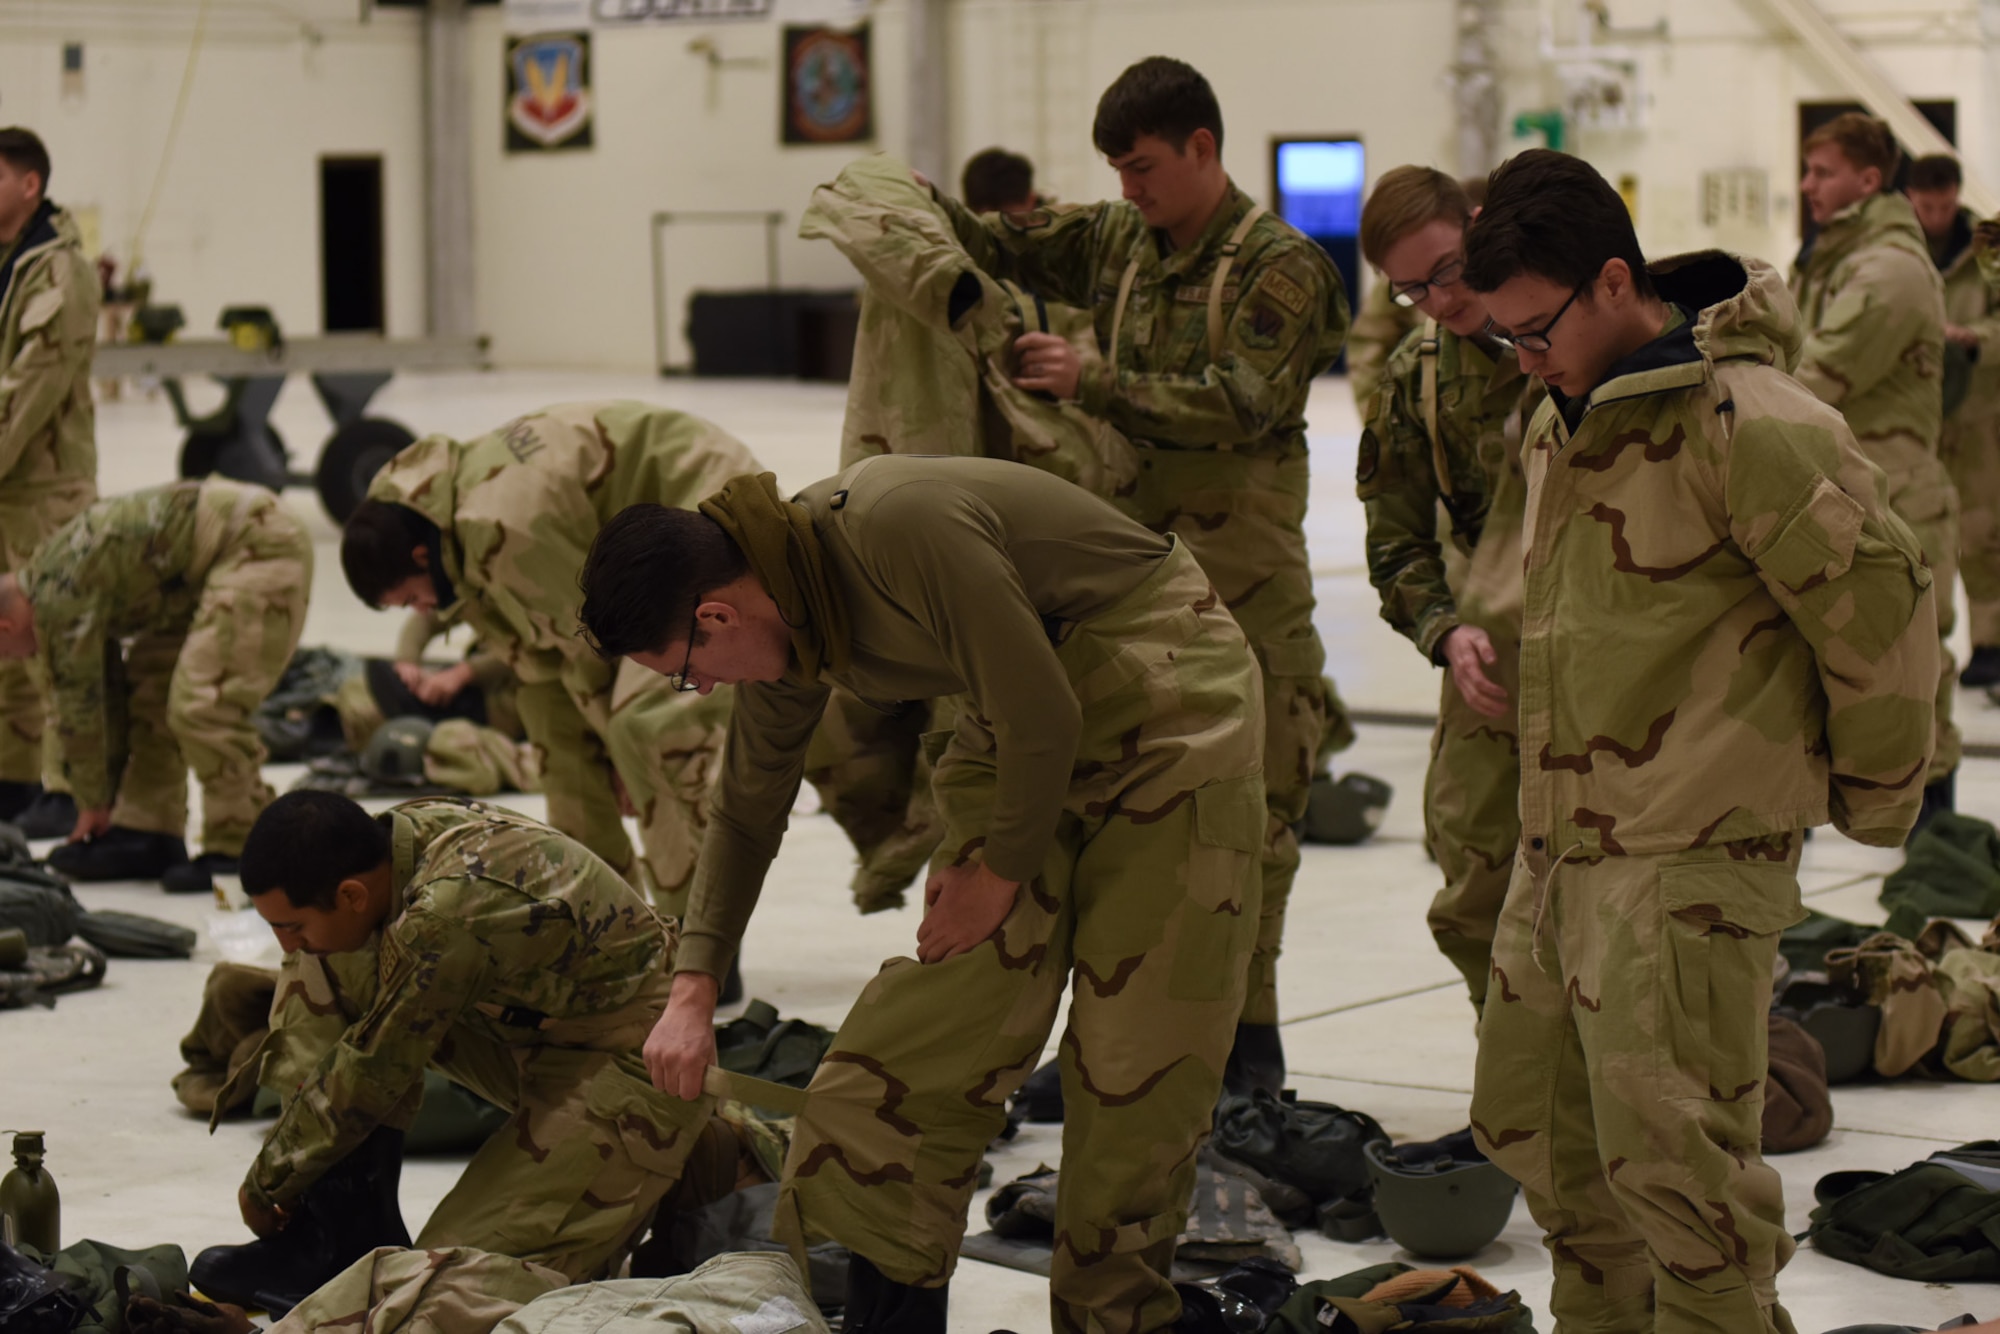 Airmen take the CBRN training course.